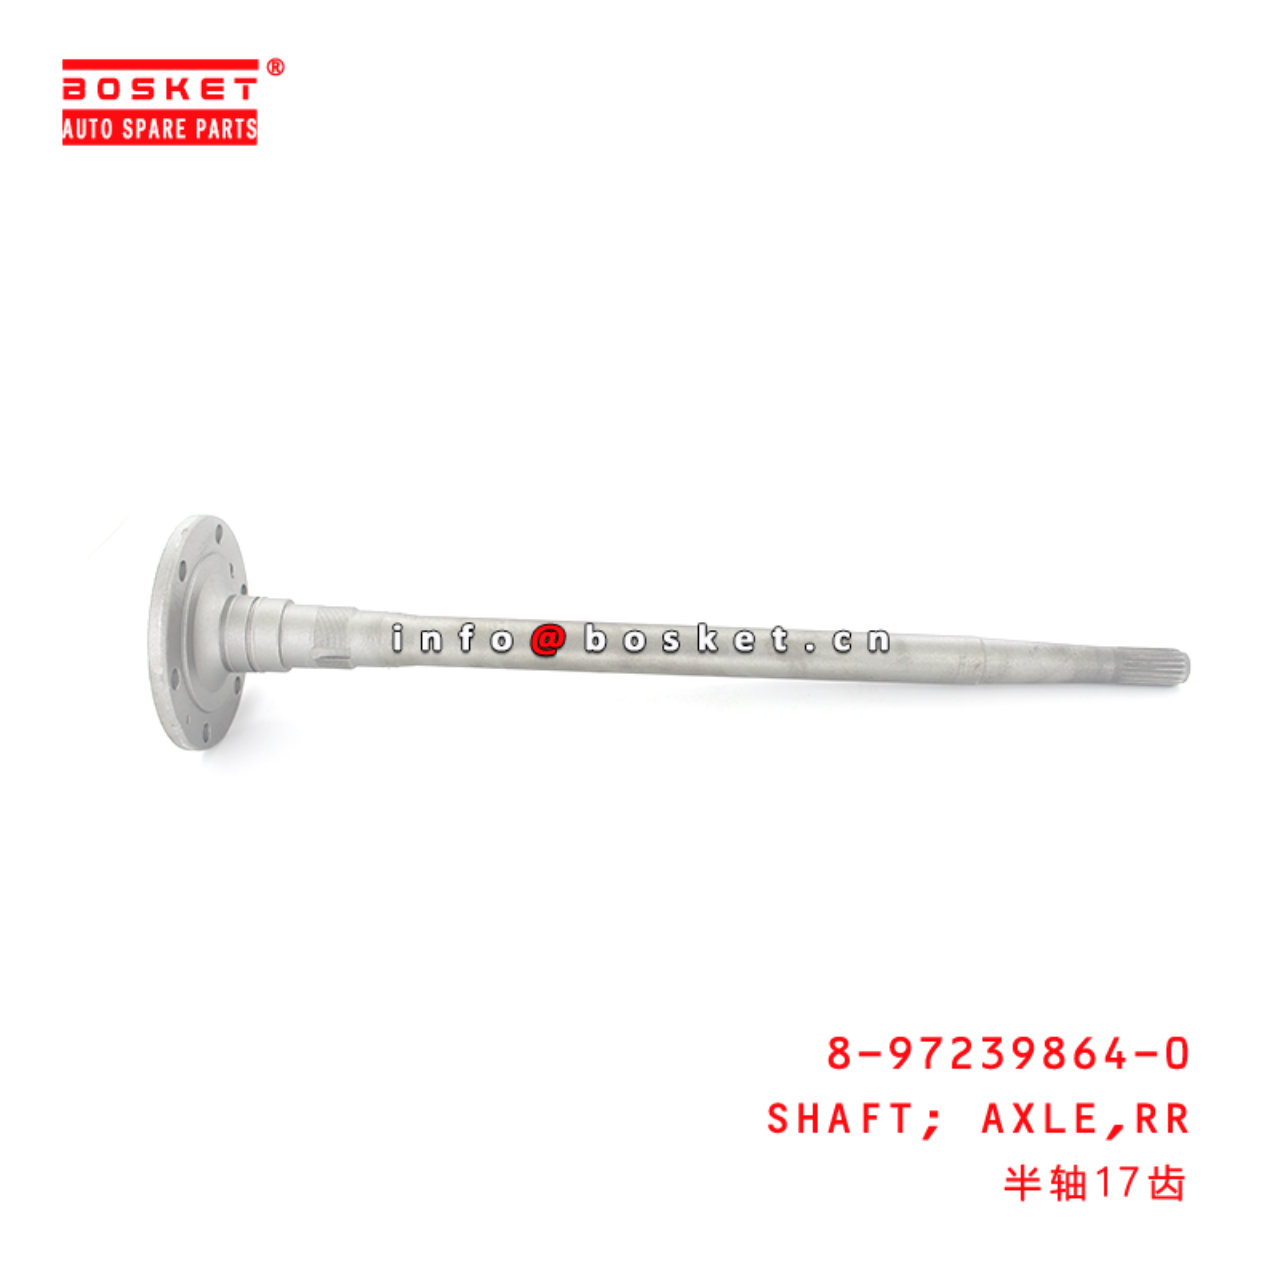 8-97239864-0 Rear Axle Shaft Suitable for ISUZU D-MAX 8972398640